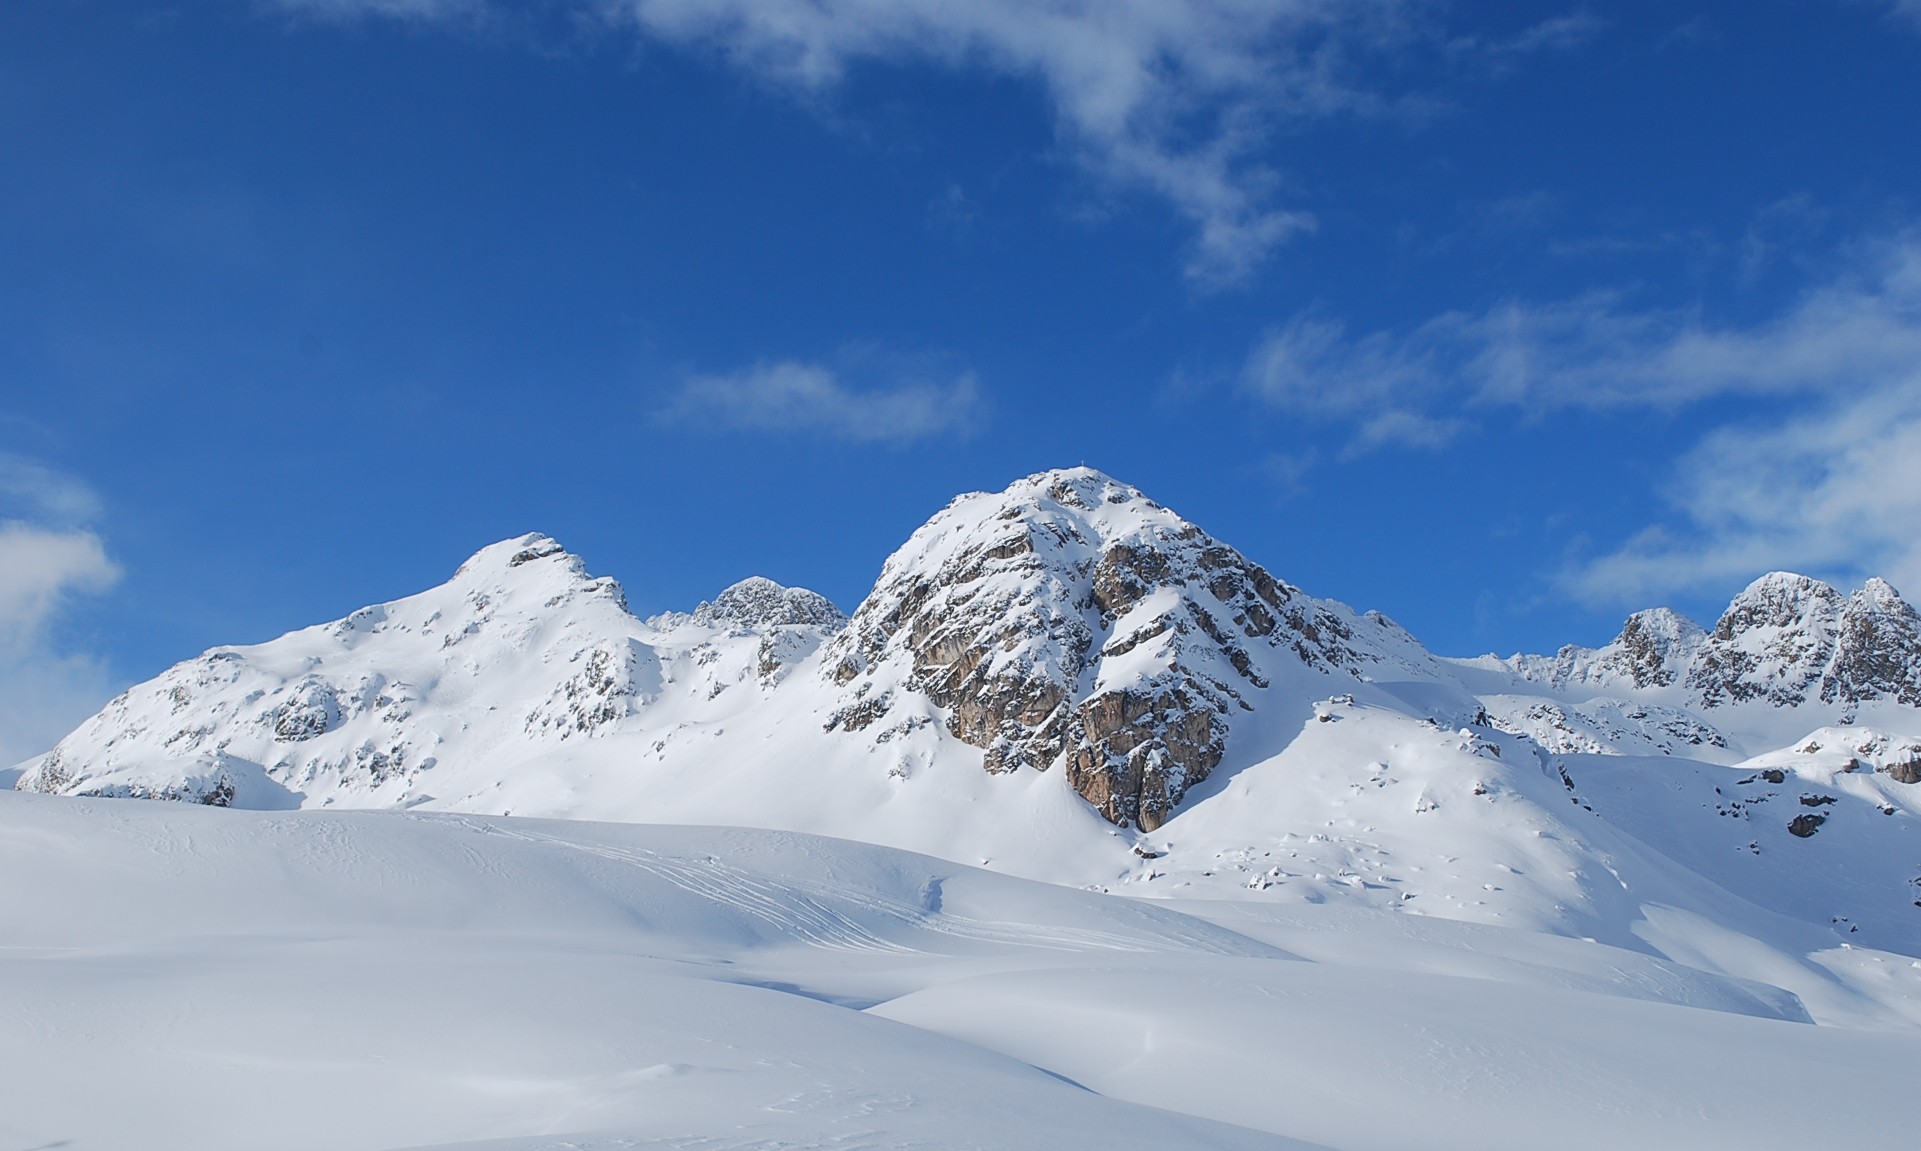 St-Moritz-Switzerland-ski-slopes-ski-resort-luxury-holiday-Europe